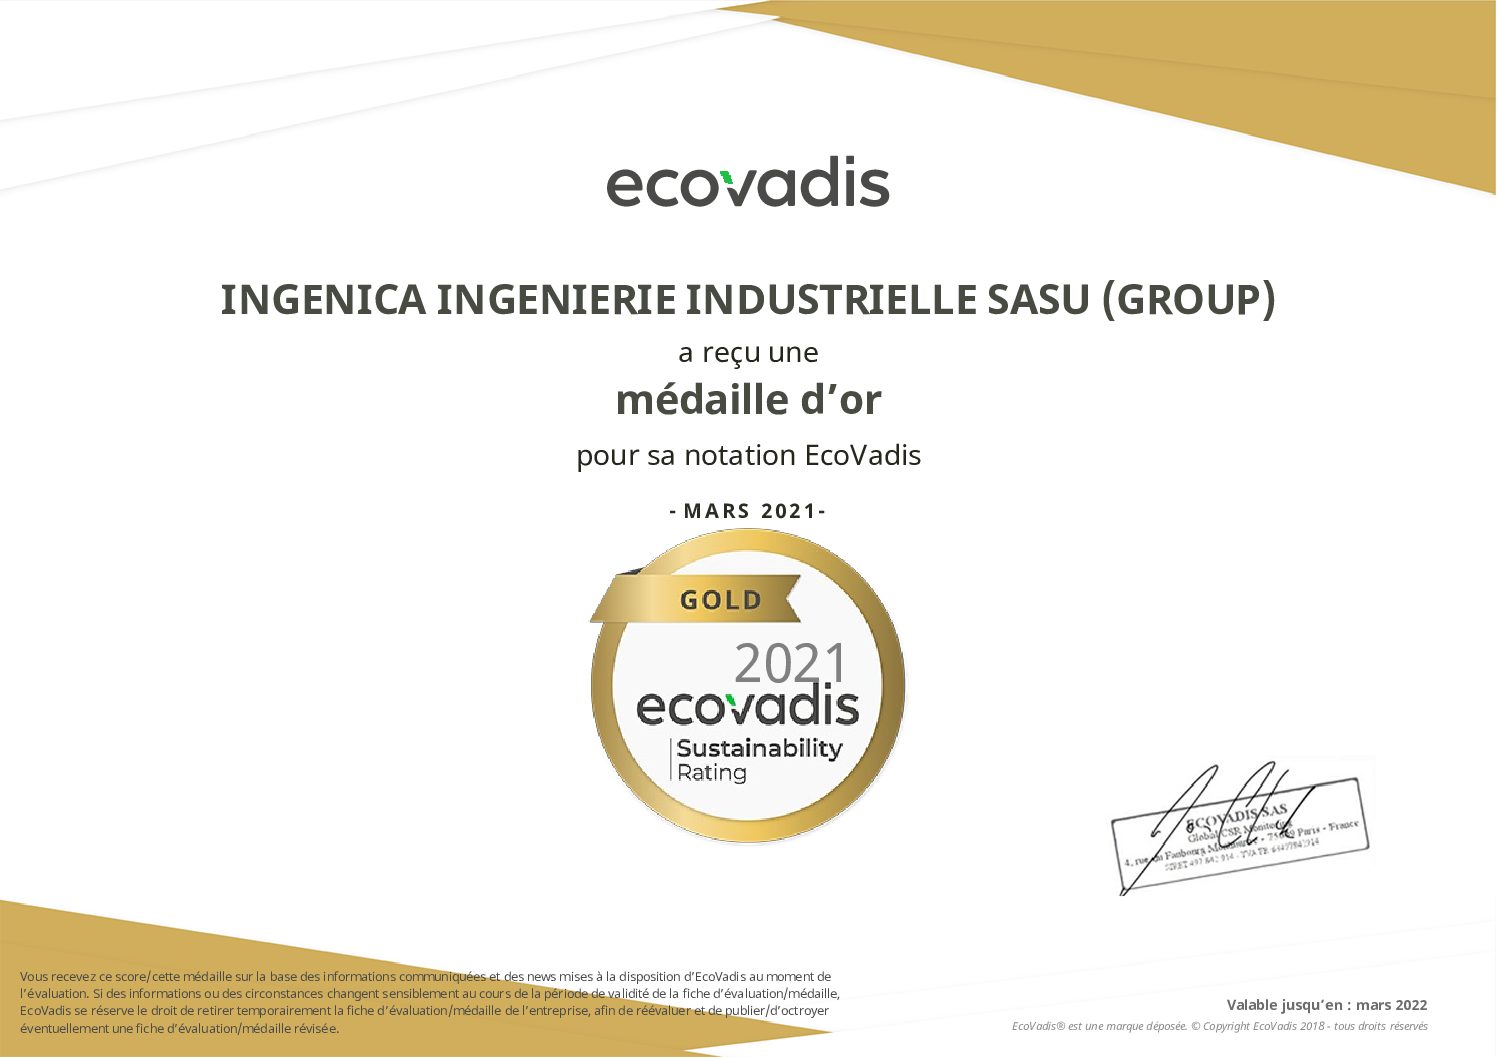 INGENICA renouvelle son label EcoVadis GOLD pour 2021 !